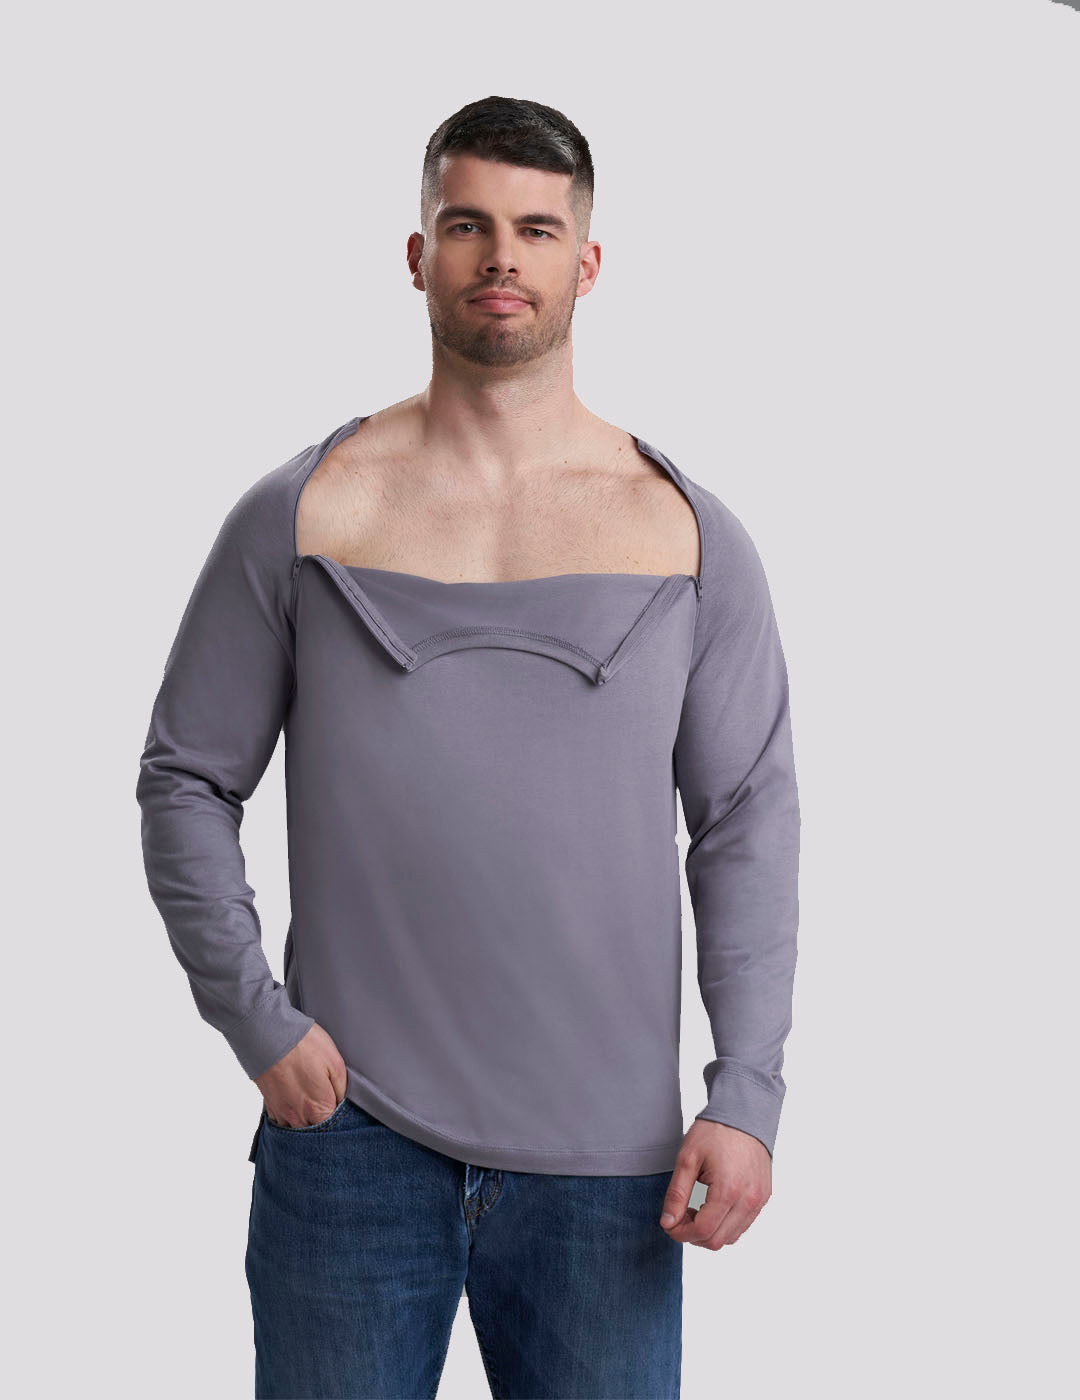 shirt:gray